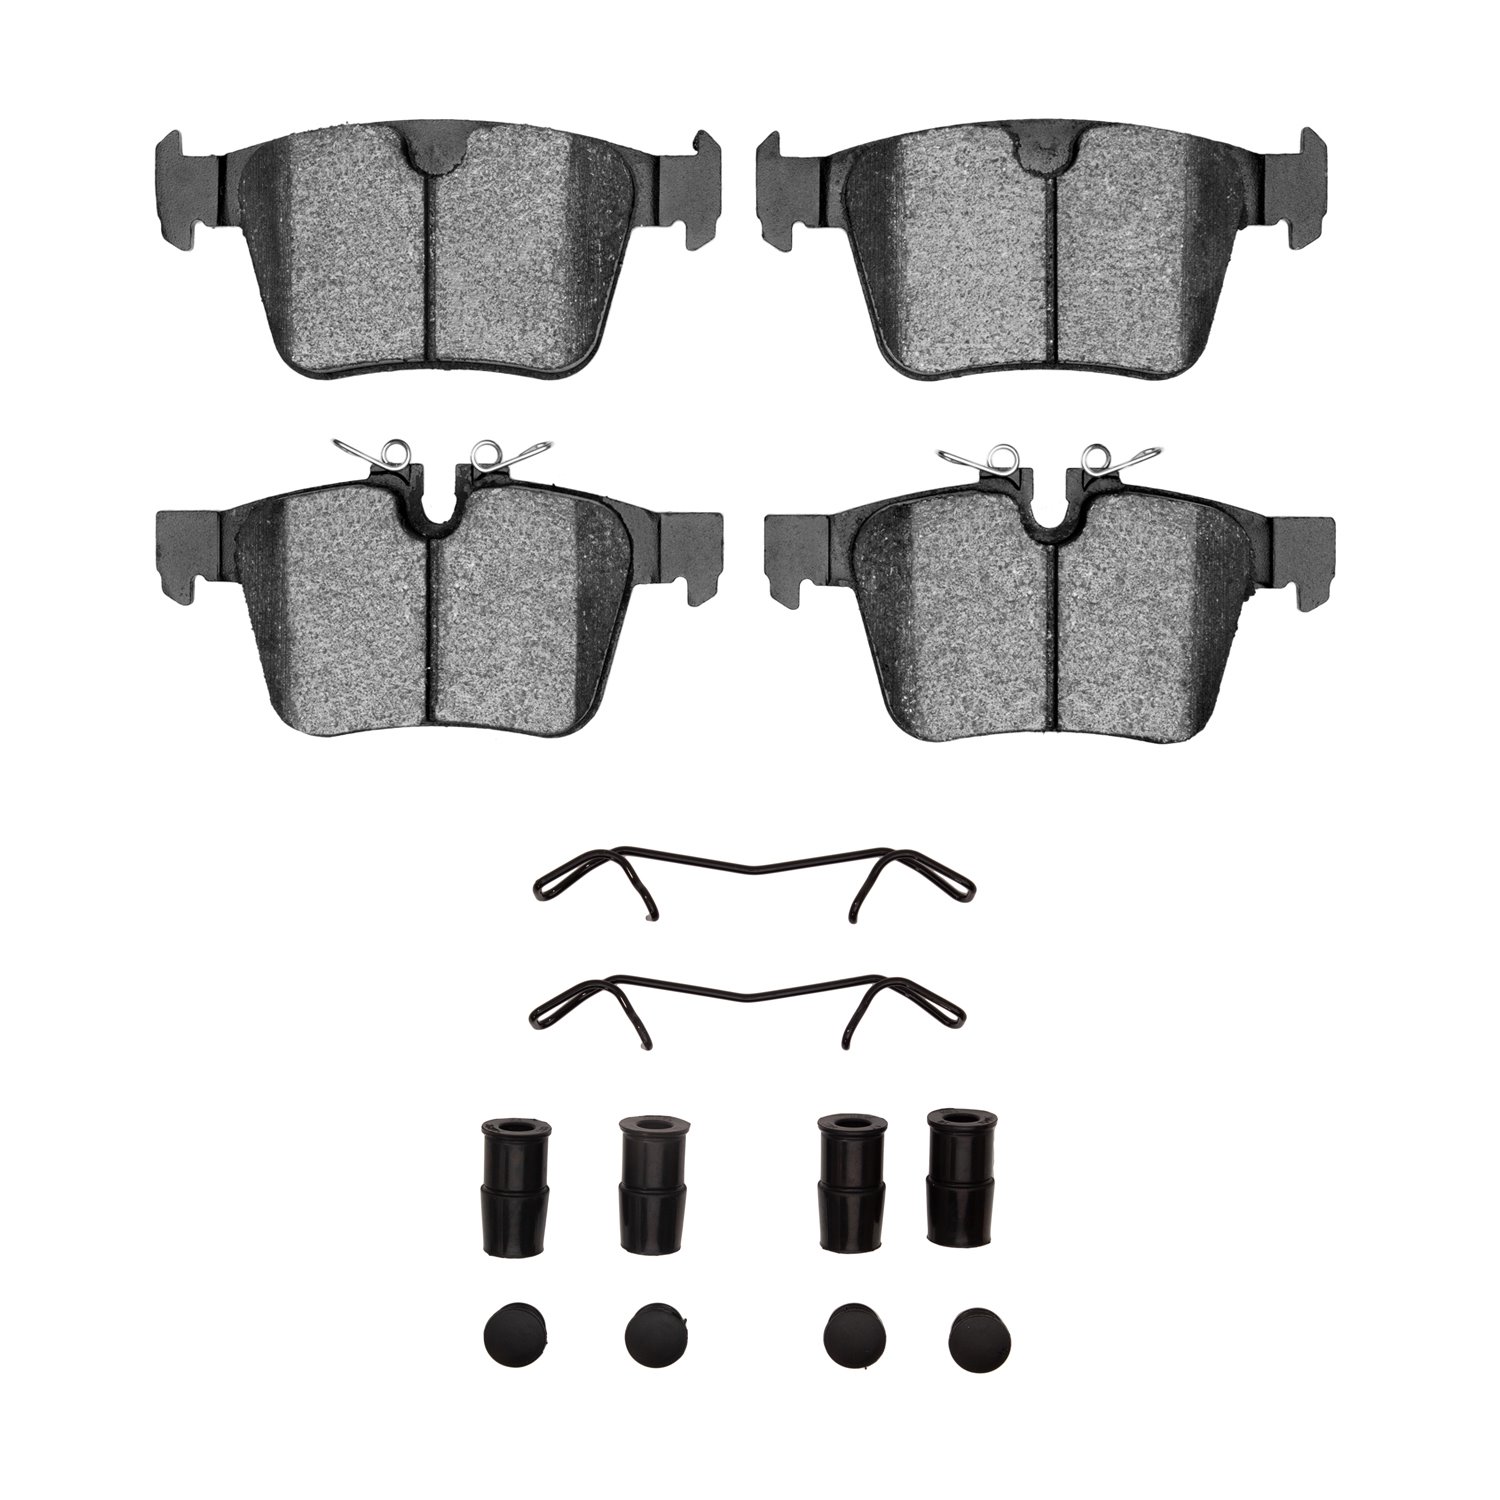 1600-1821-01 5000 Euro Ceramic Brake Pads & Hardware Kit, Fits Select Multiple Makes/Models, Position: Rear